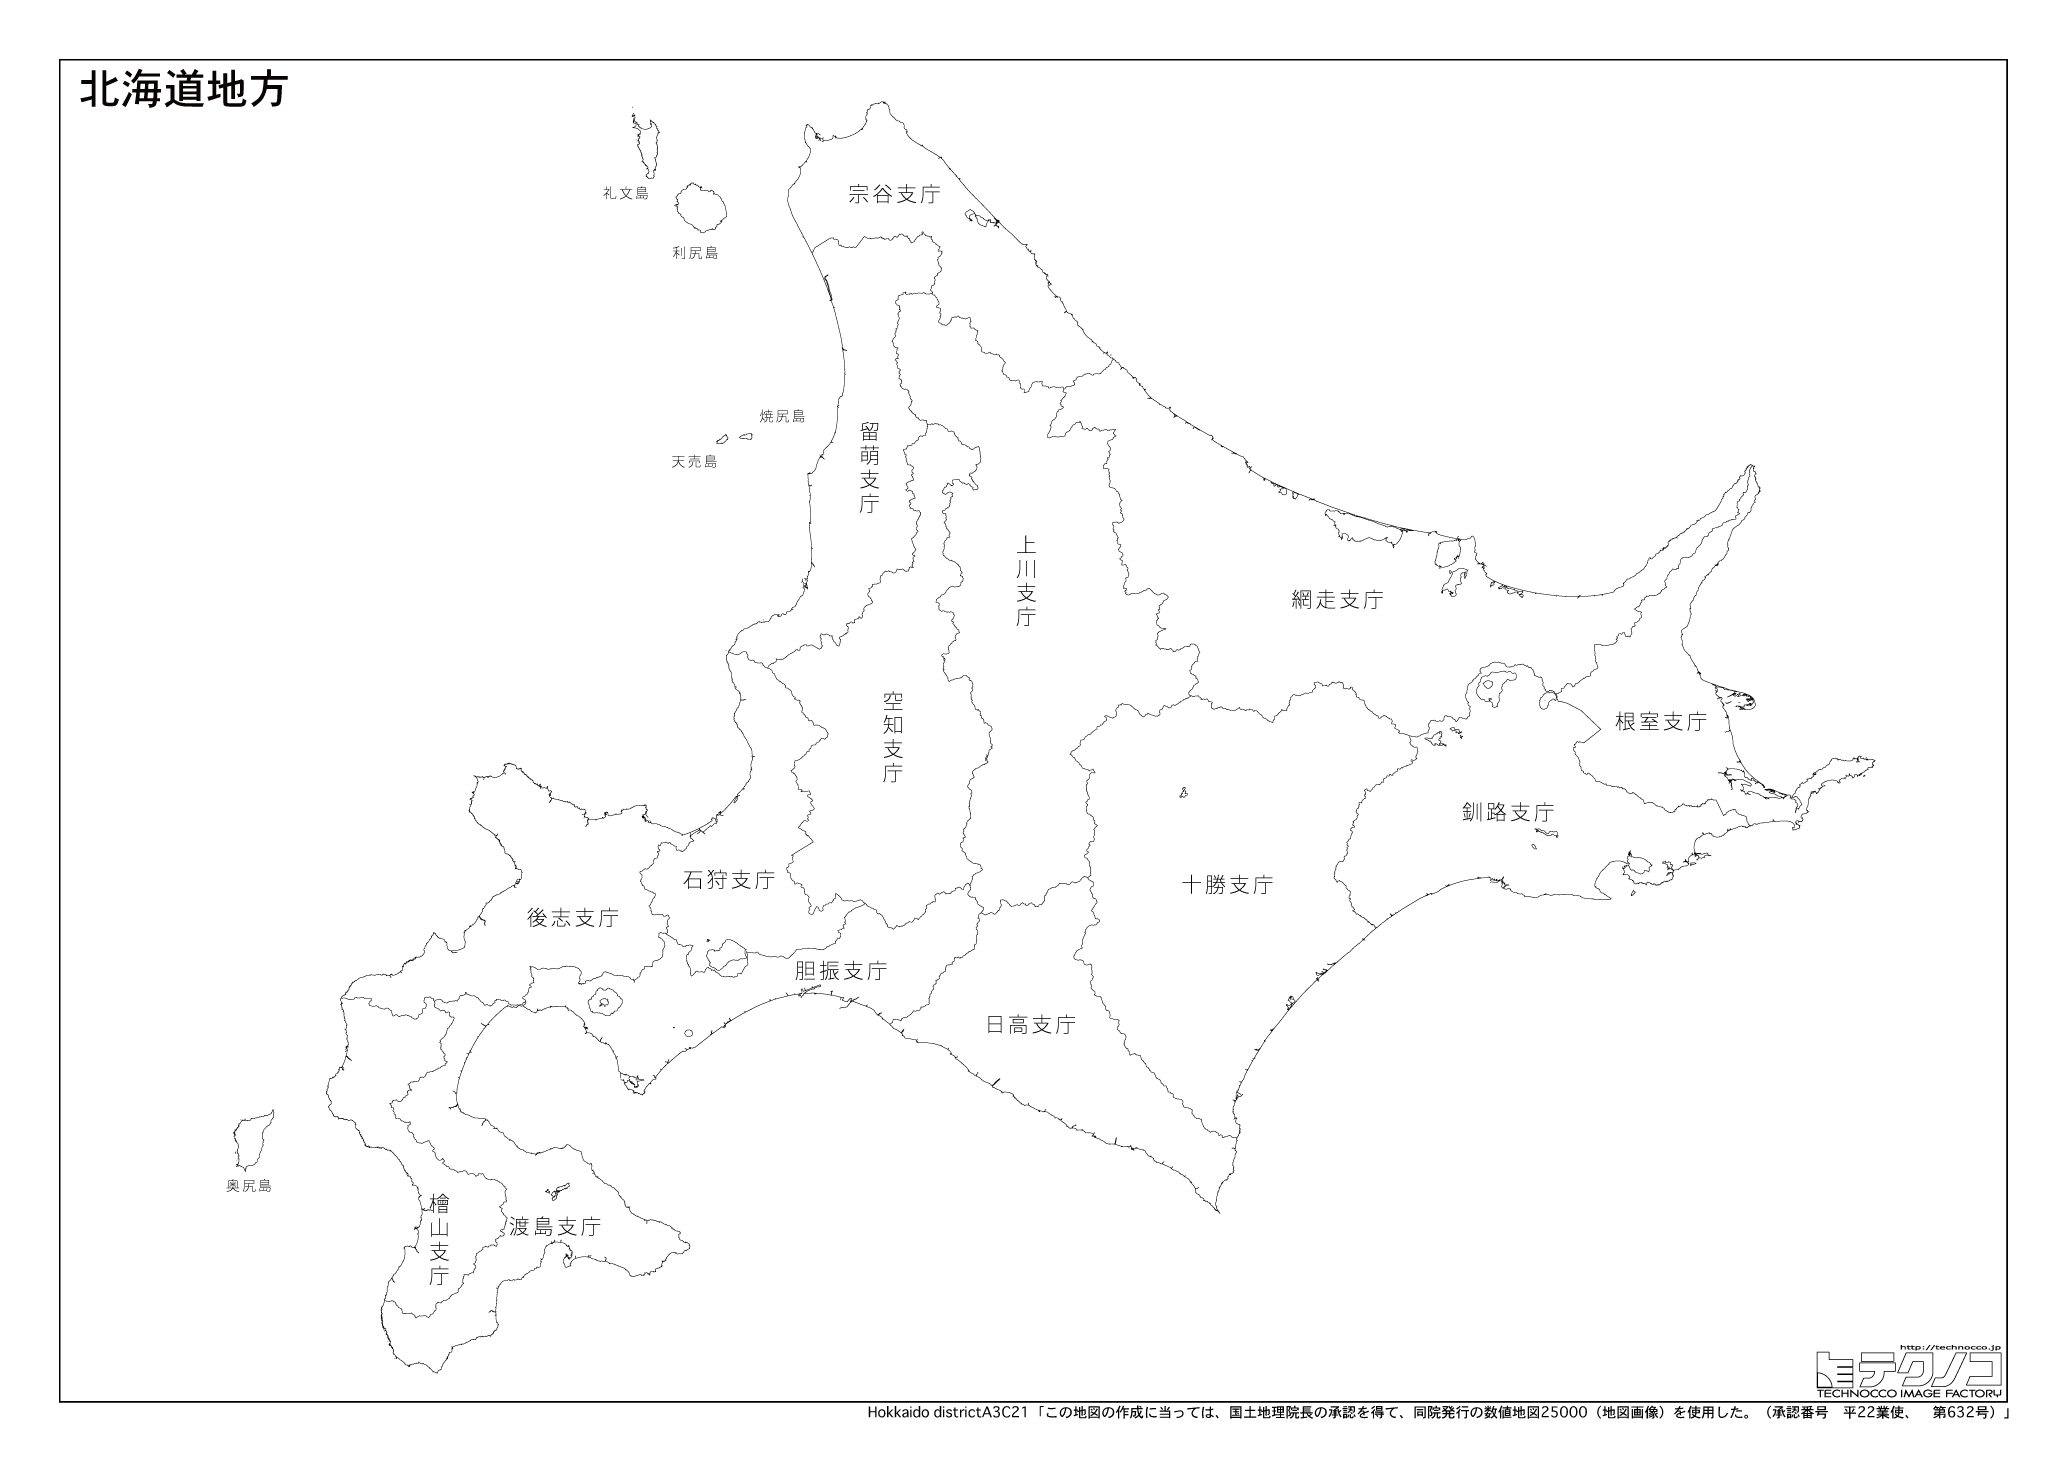 Japan Image 北海道 地図 フリー